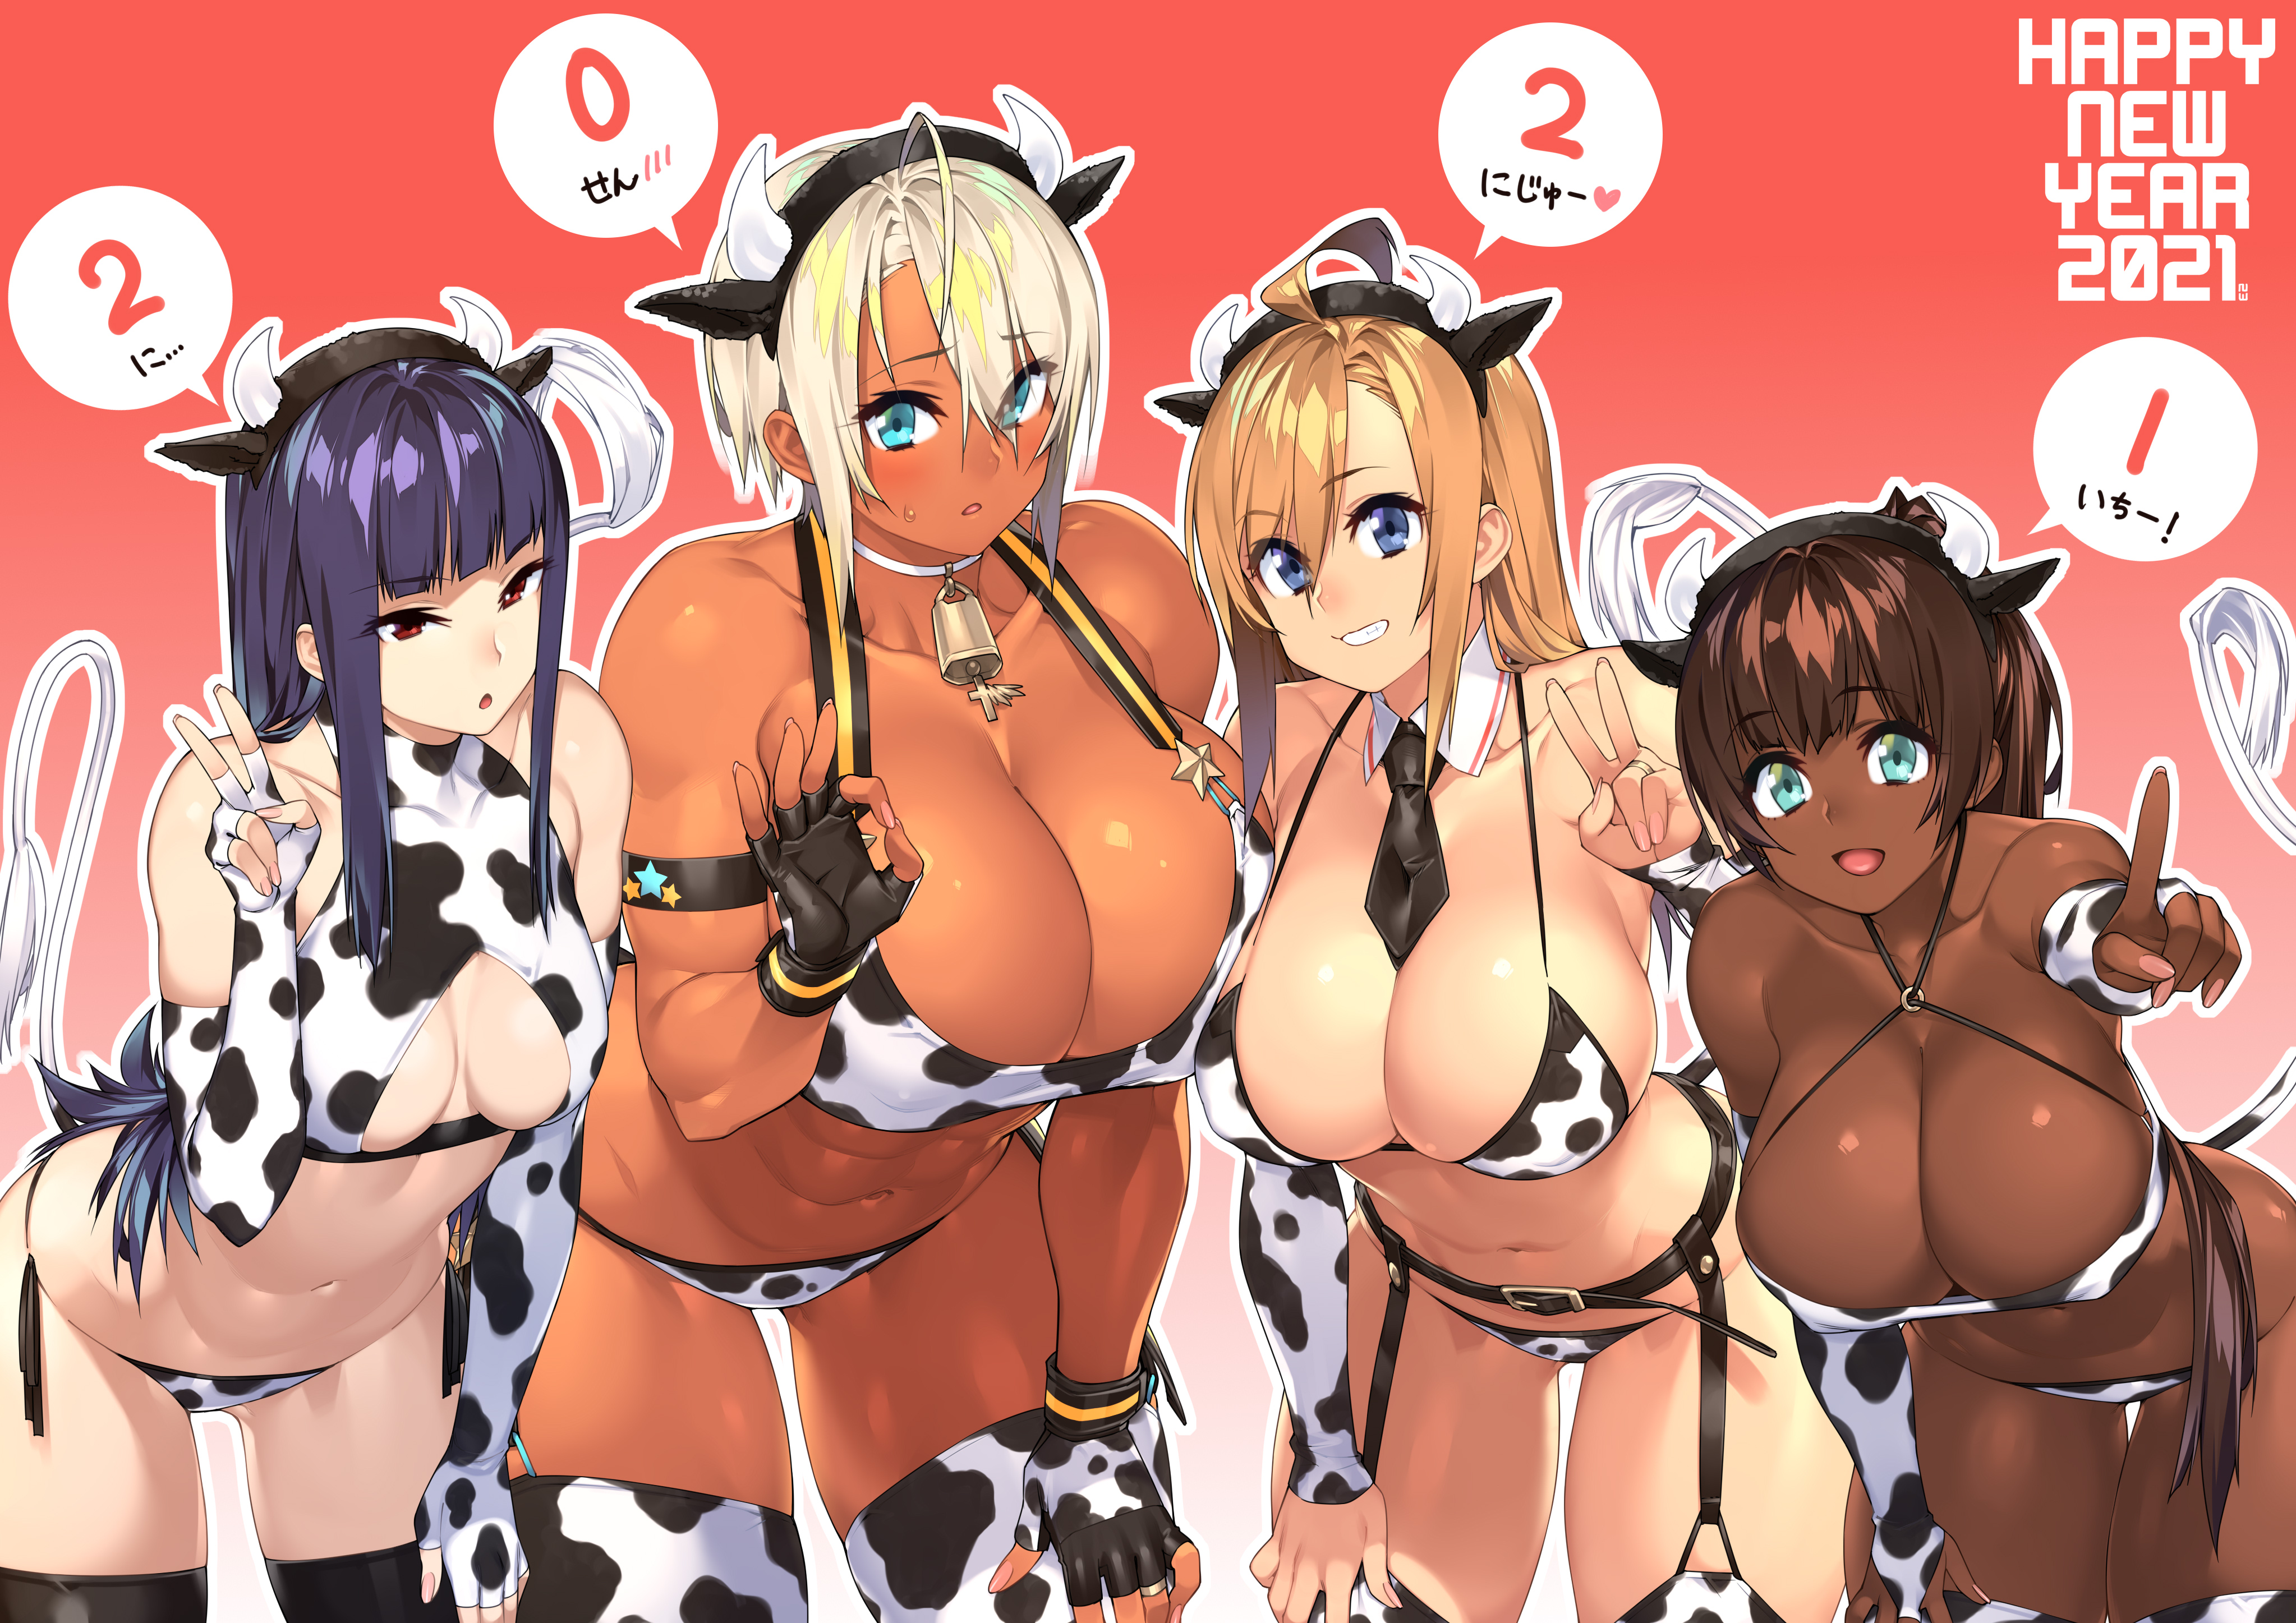 Anime 4093x2894 anime anime girls New Year dark skin cow girl bikini simple background big boobs cleavage Real XXIII horns animal ears tail huge breasts cowkinis